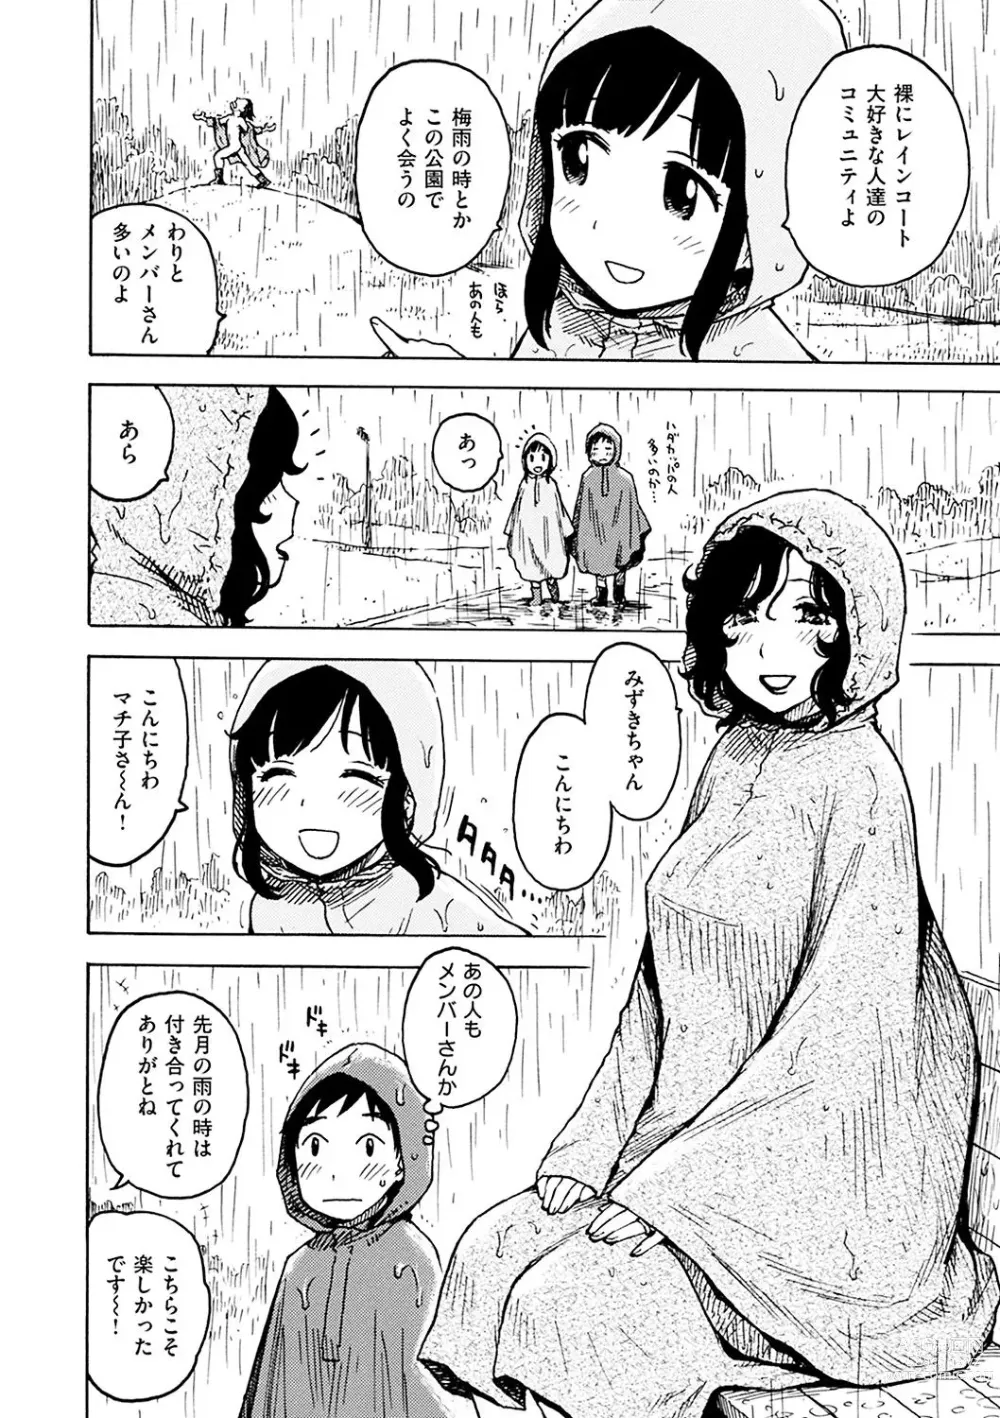 Page 312 of manga Naho-chan wa Onahoya-san